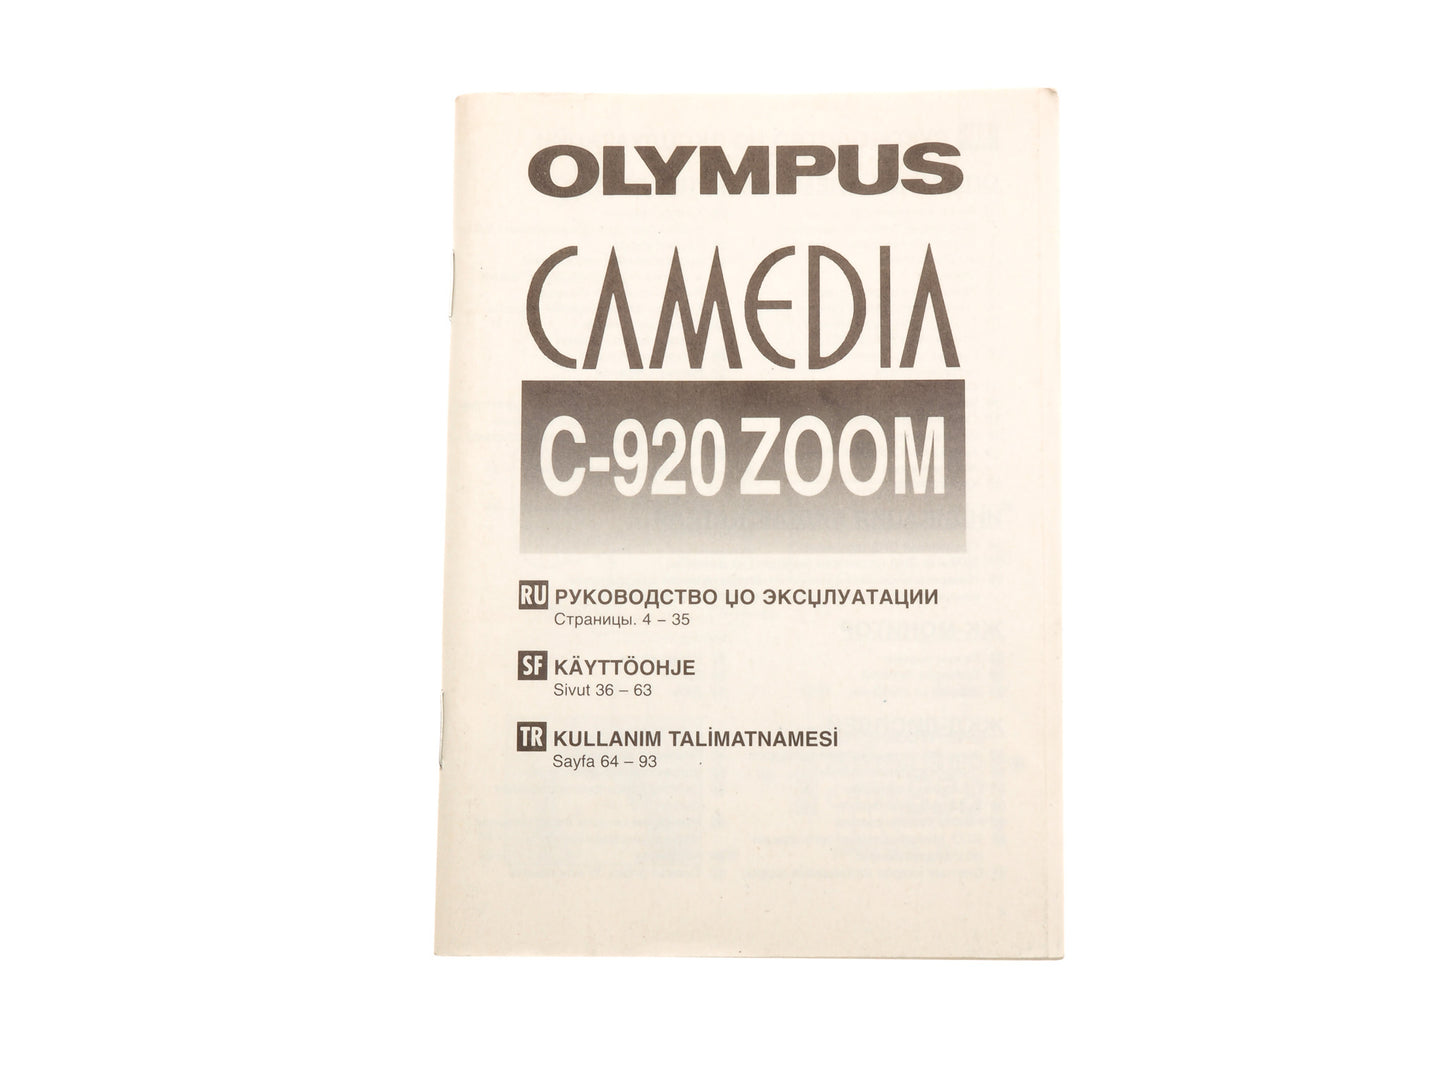 Olympus Camedia C-920 Zoom Instructions - Accessory